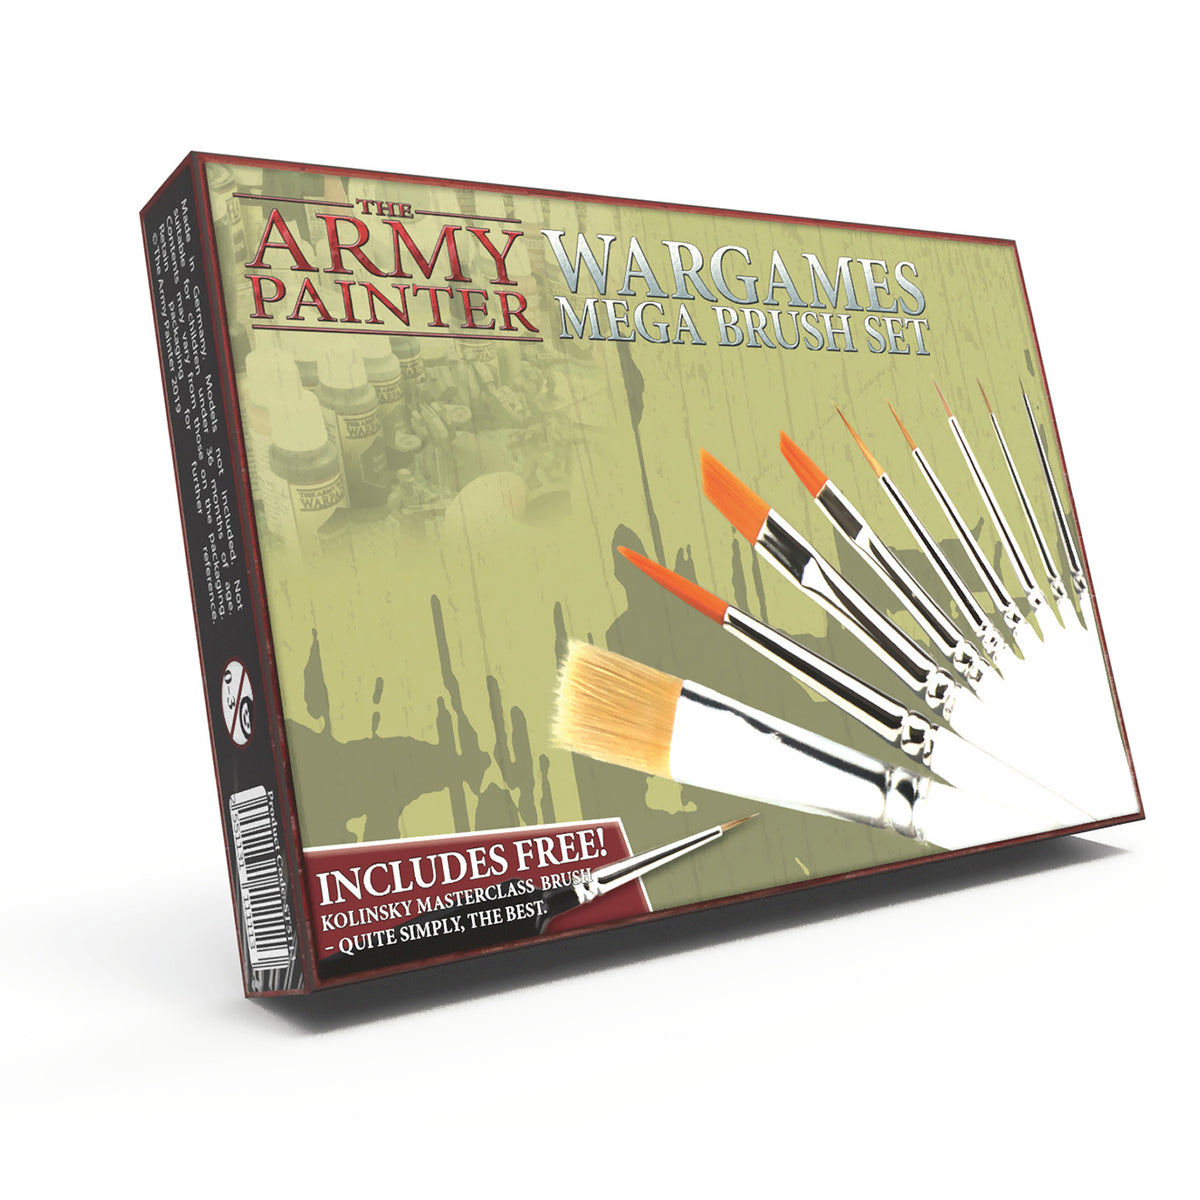 Brushes: Army Painter - Wargamer Brush: Large Drybrush - Tower of Games